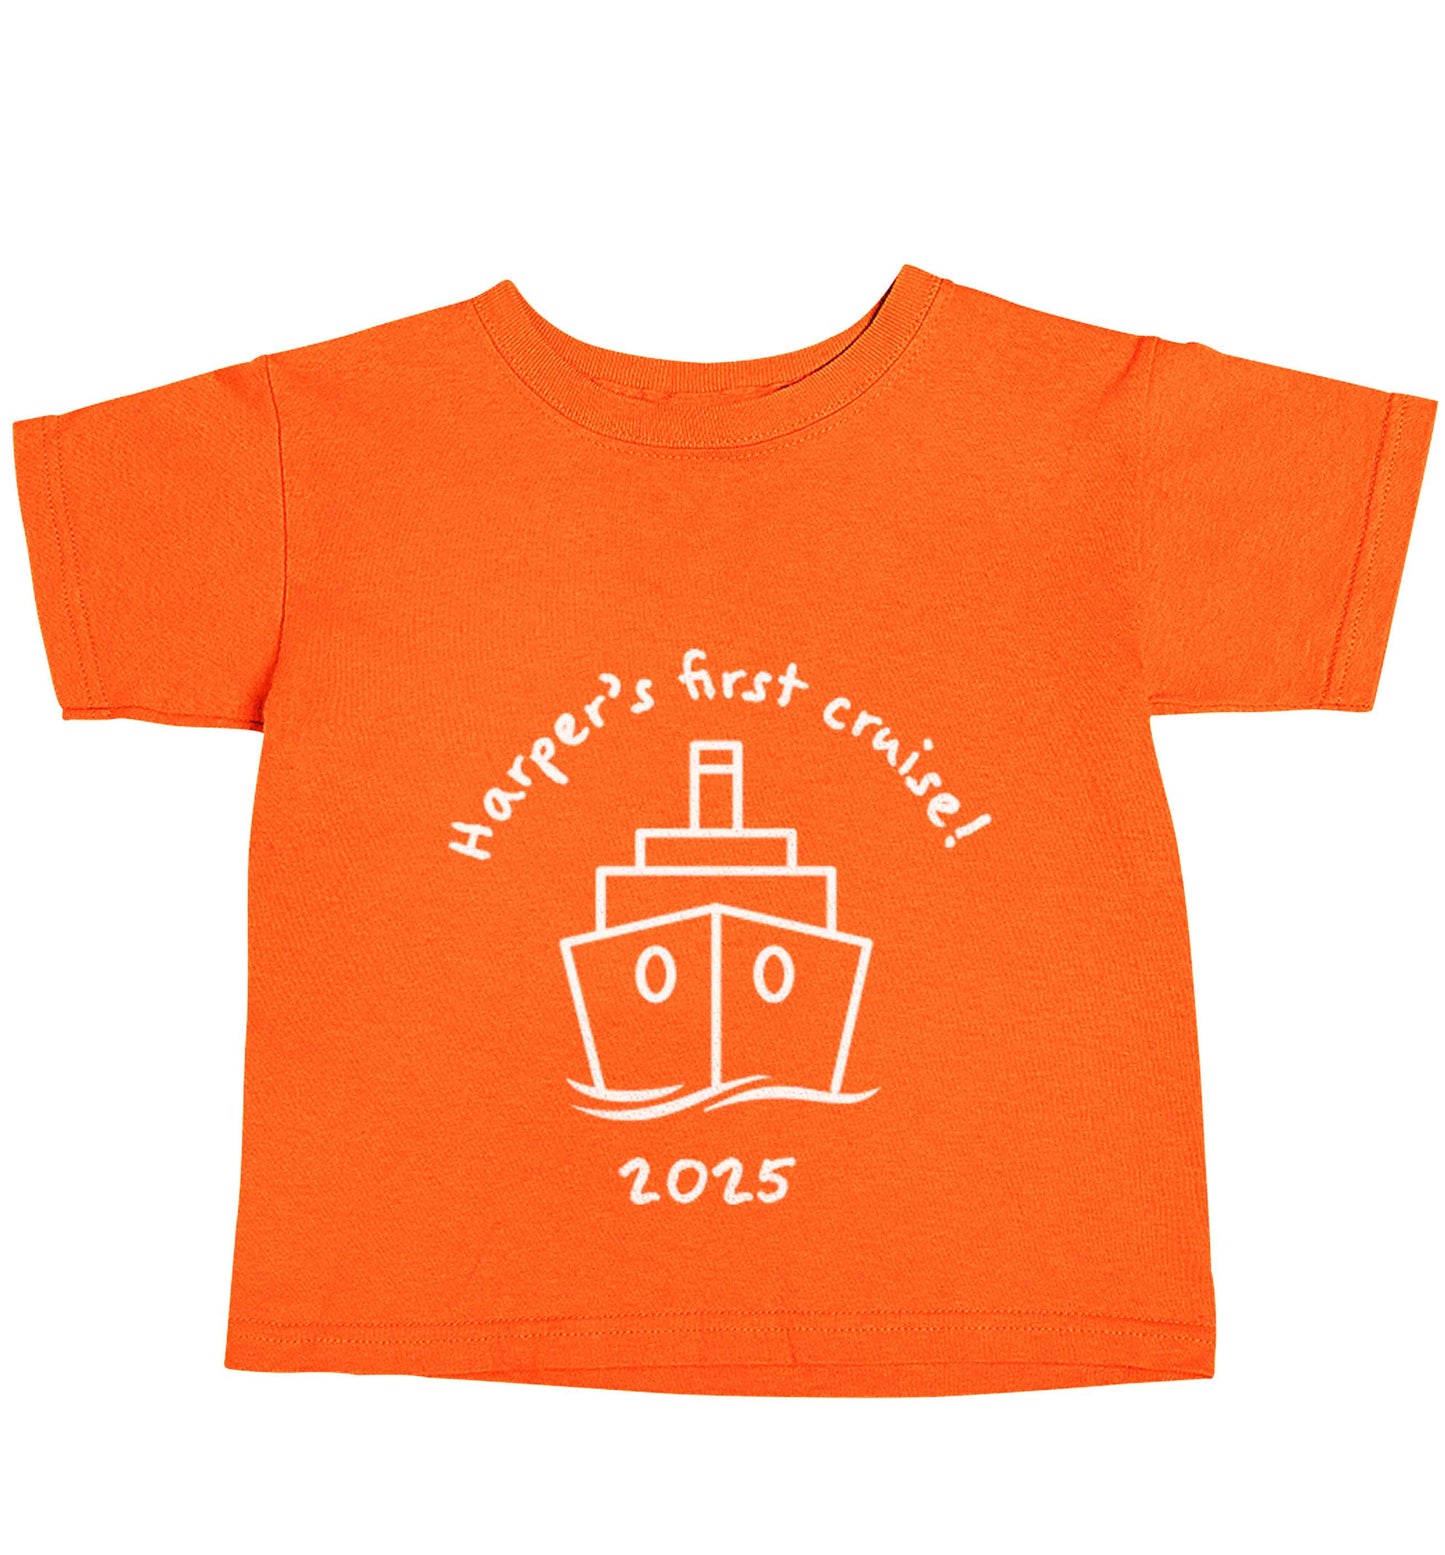 Personalised first cruise orange baby toddler Tshirt 2 Years